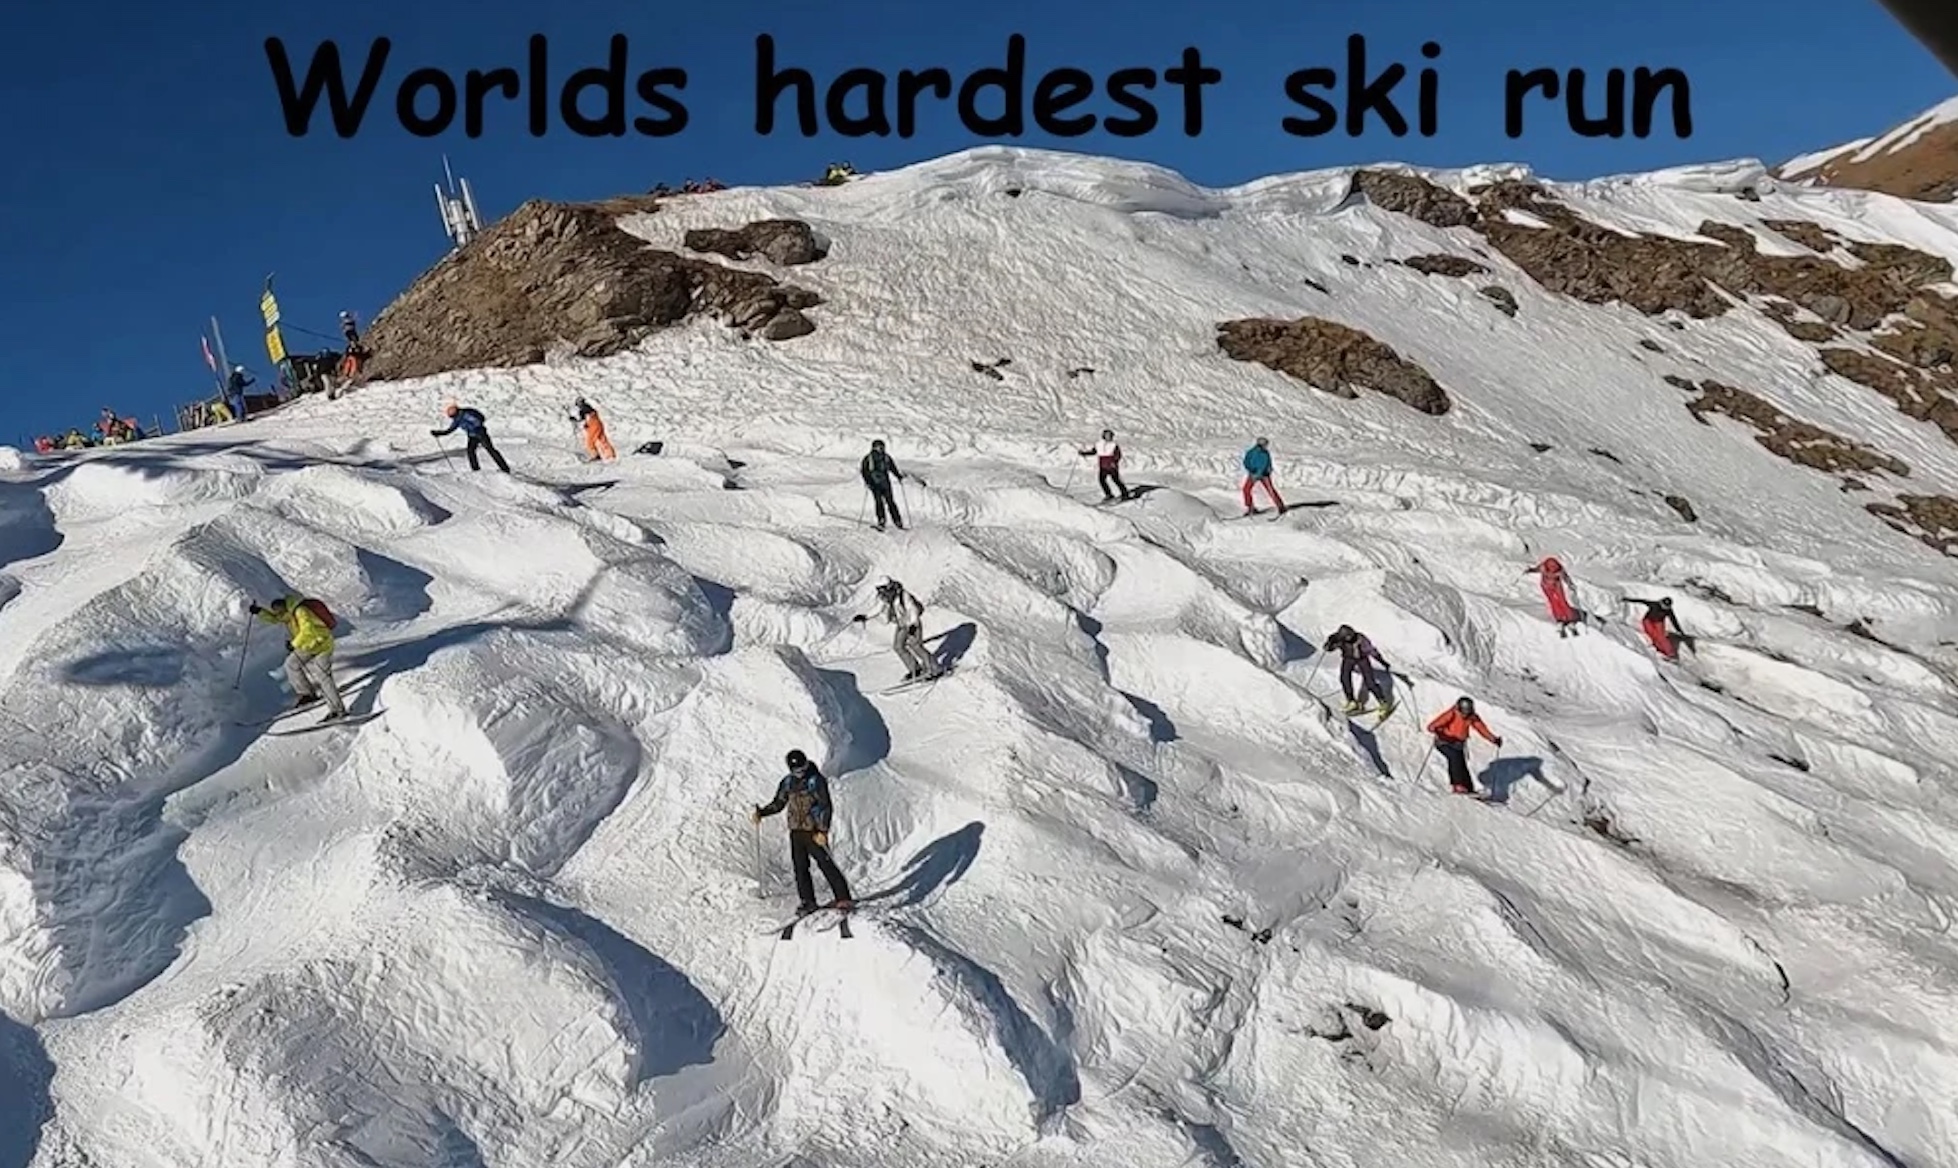 Is This The World's Hardest Ski Run?